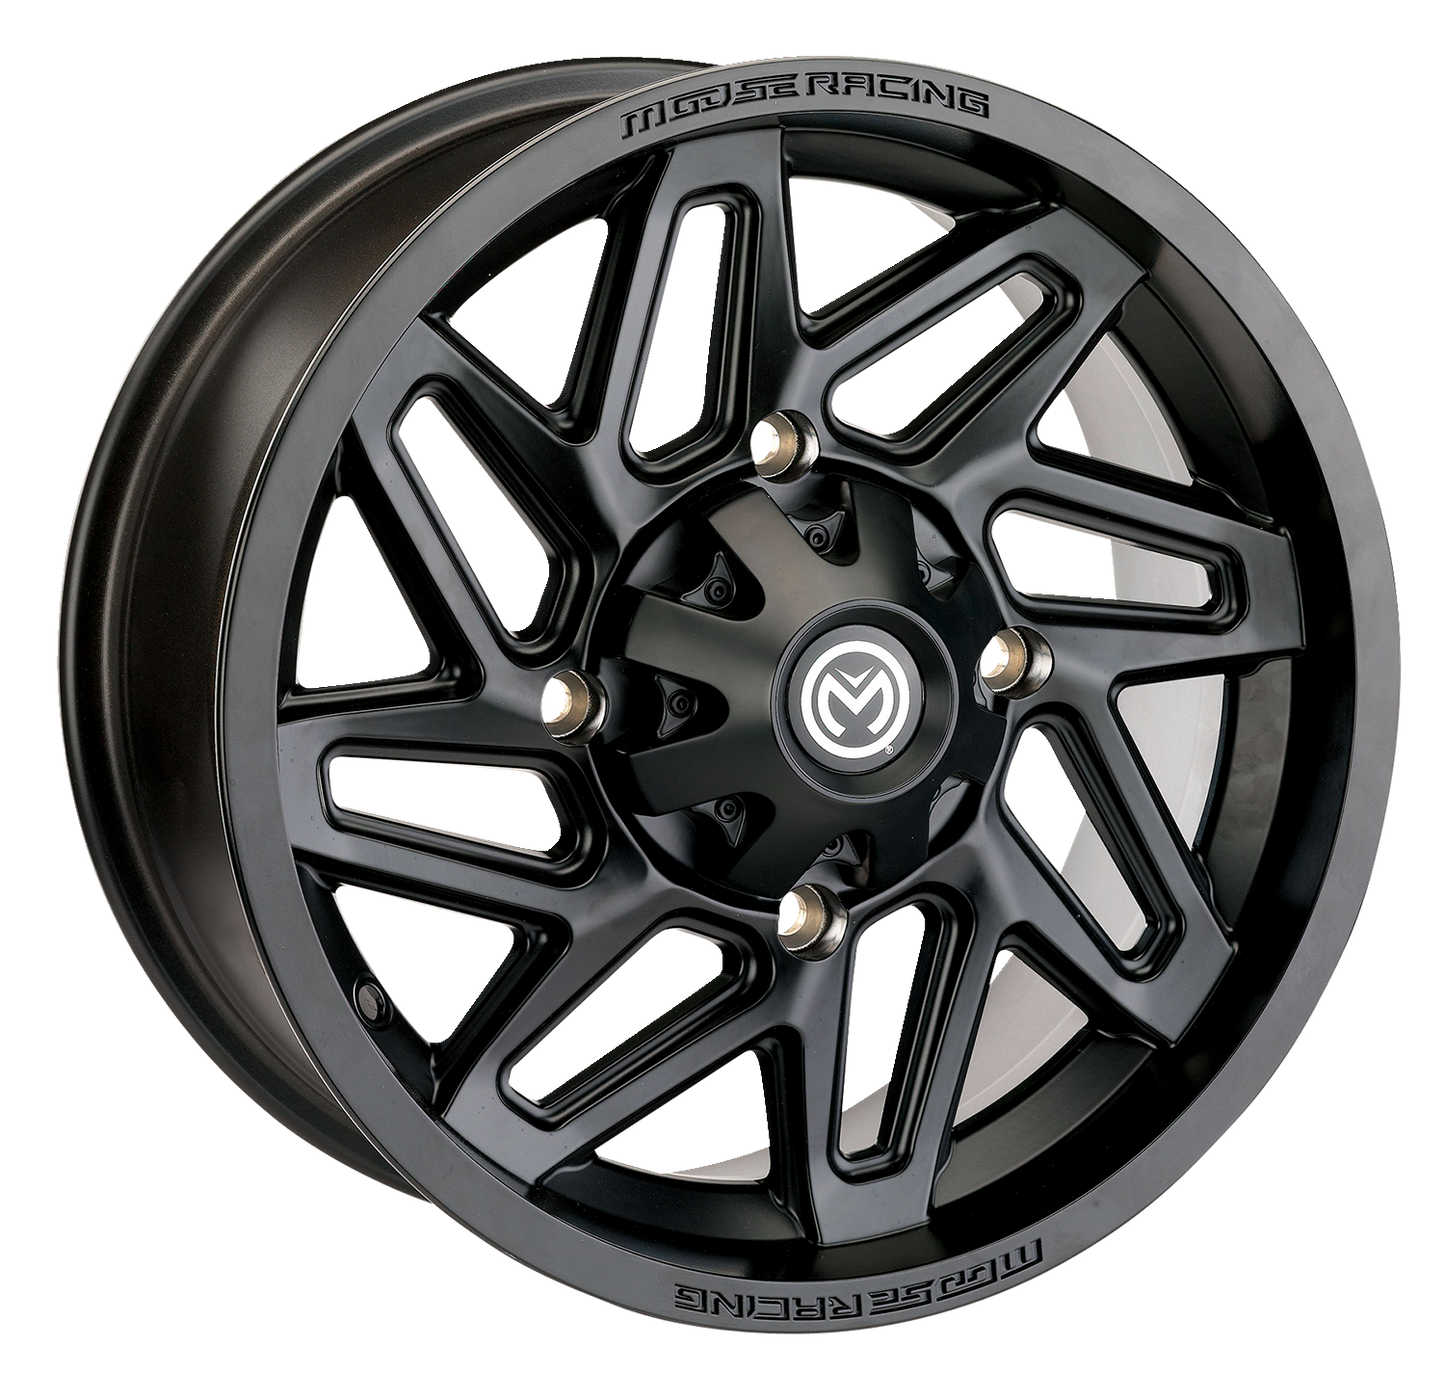 MOOSE UTILITY Wheel - 361X - Front/Rear - Black - 15x7 - 4/136 - 5+2 361MO157136MB55